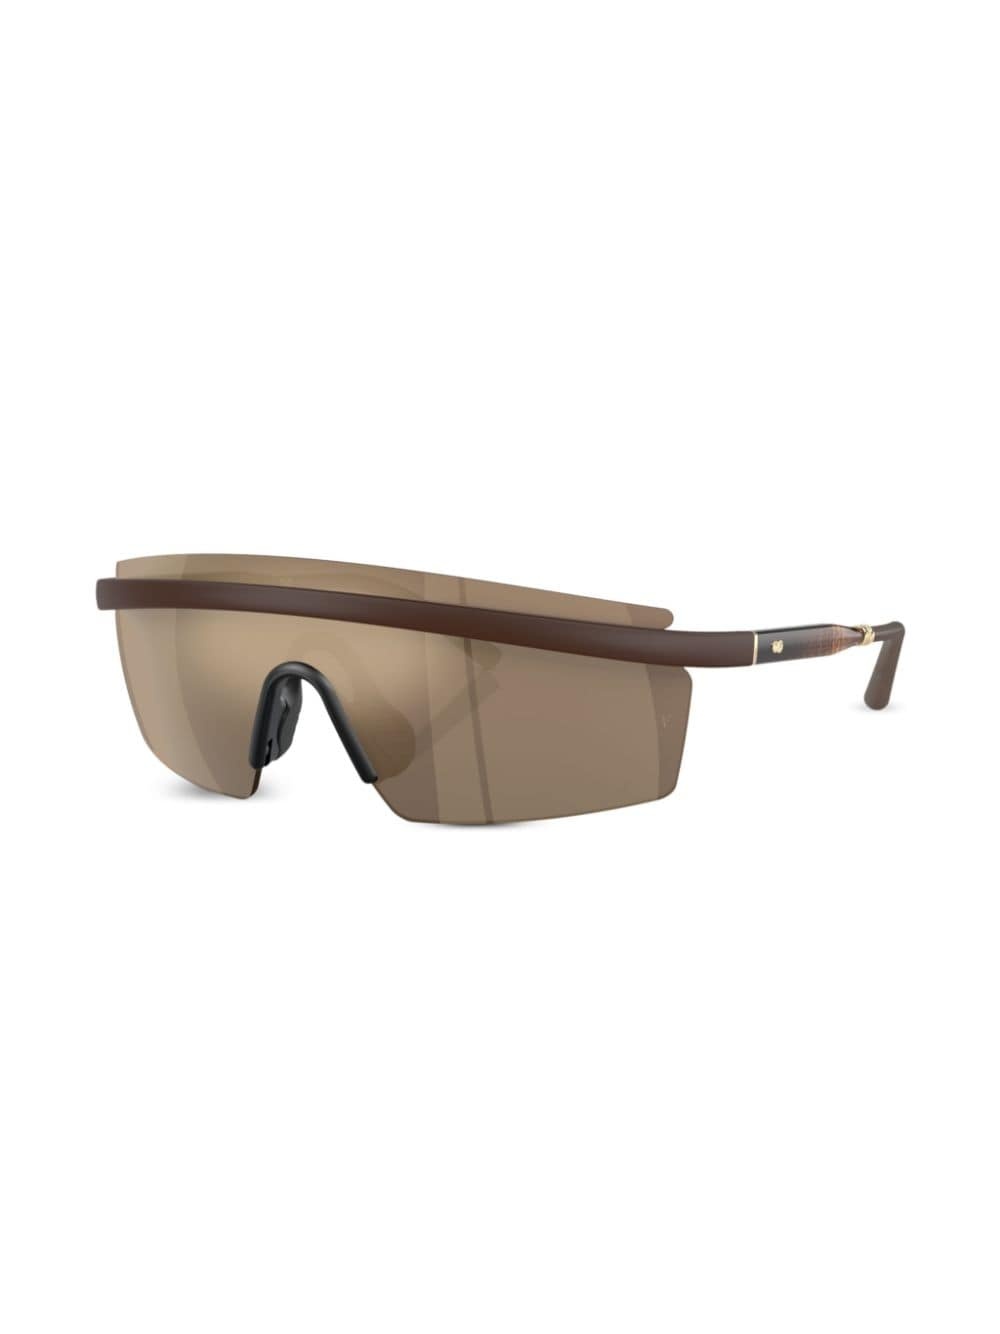 R-4 mask-frame sunglasses - 2